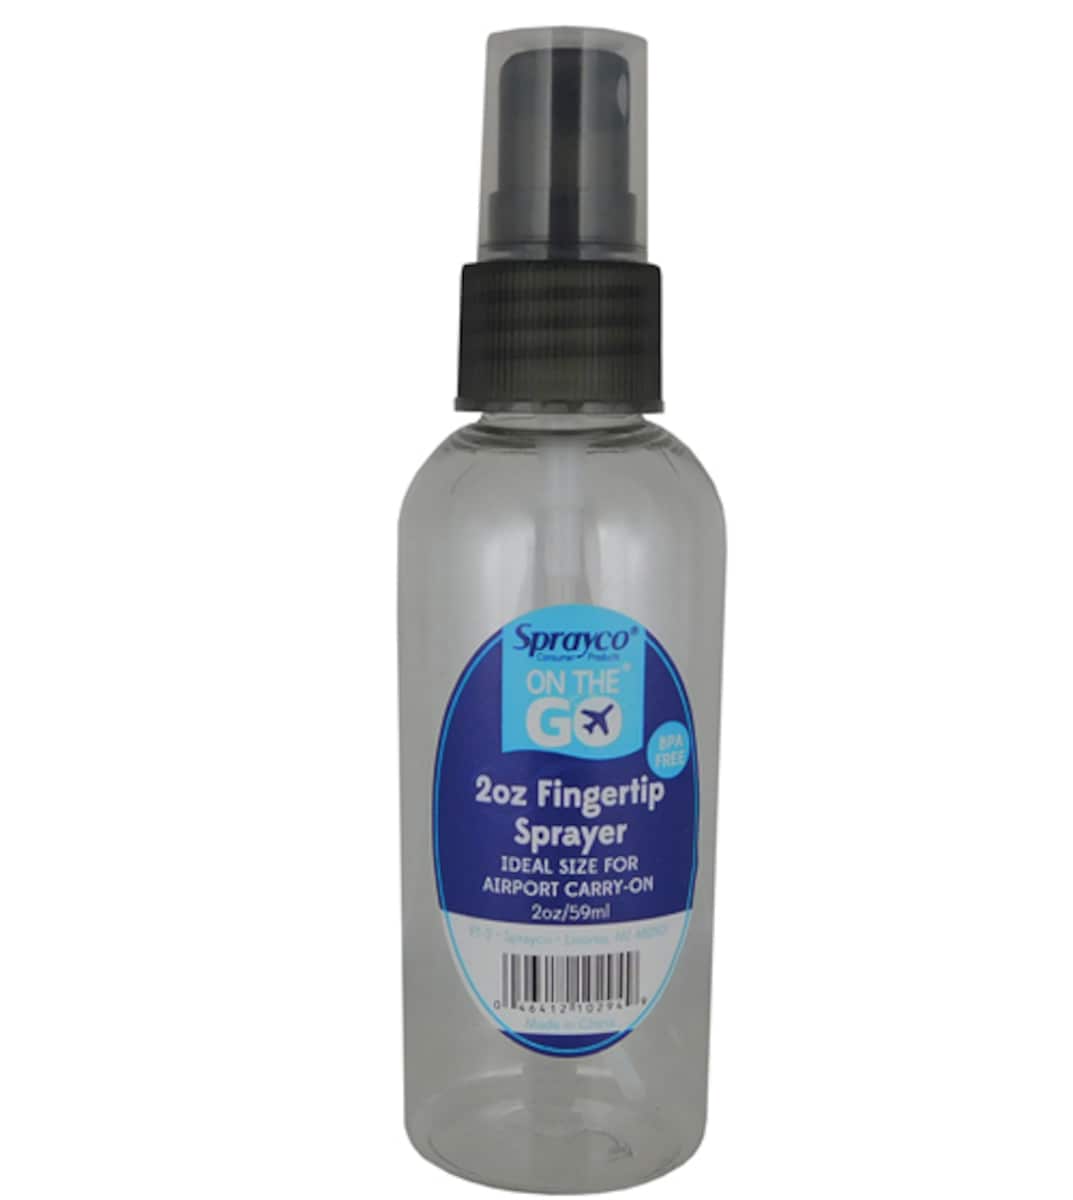 SprayCo Fingetrip Sprayer Bottle 59ml